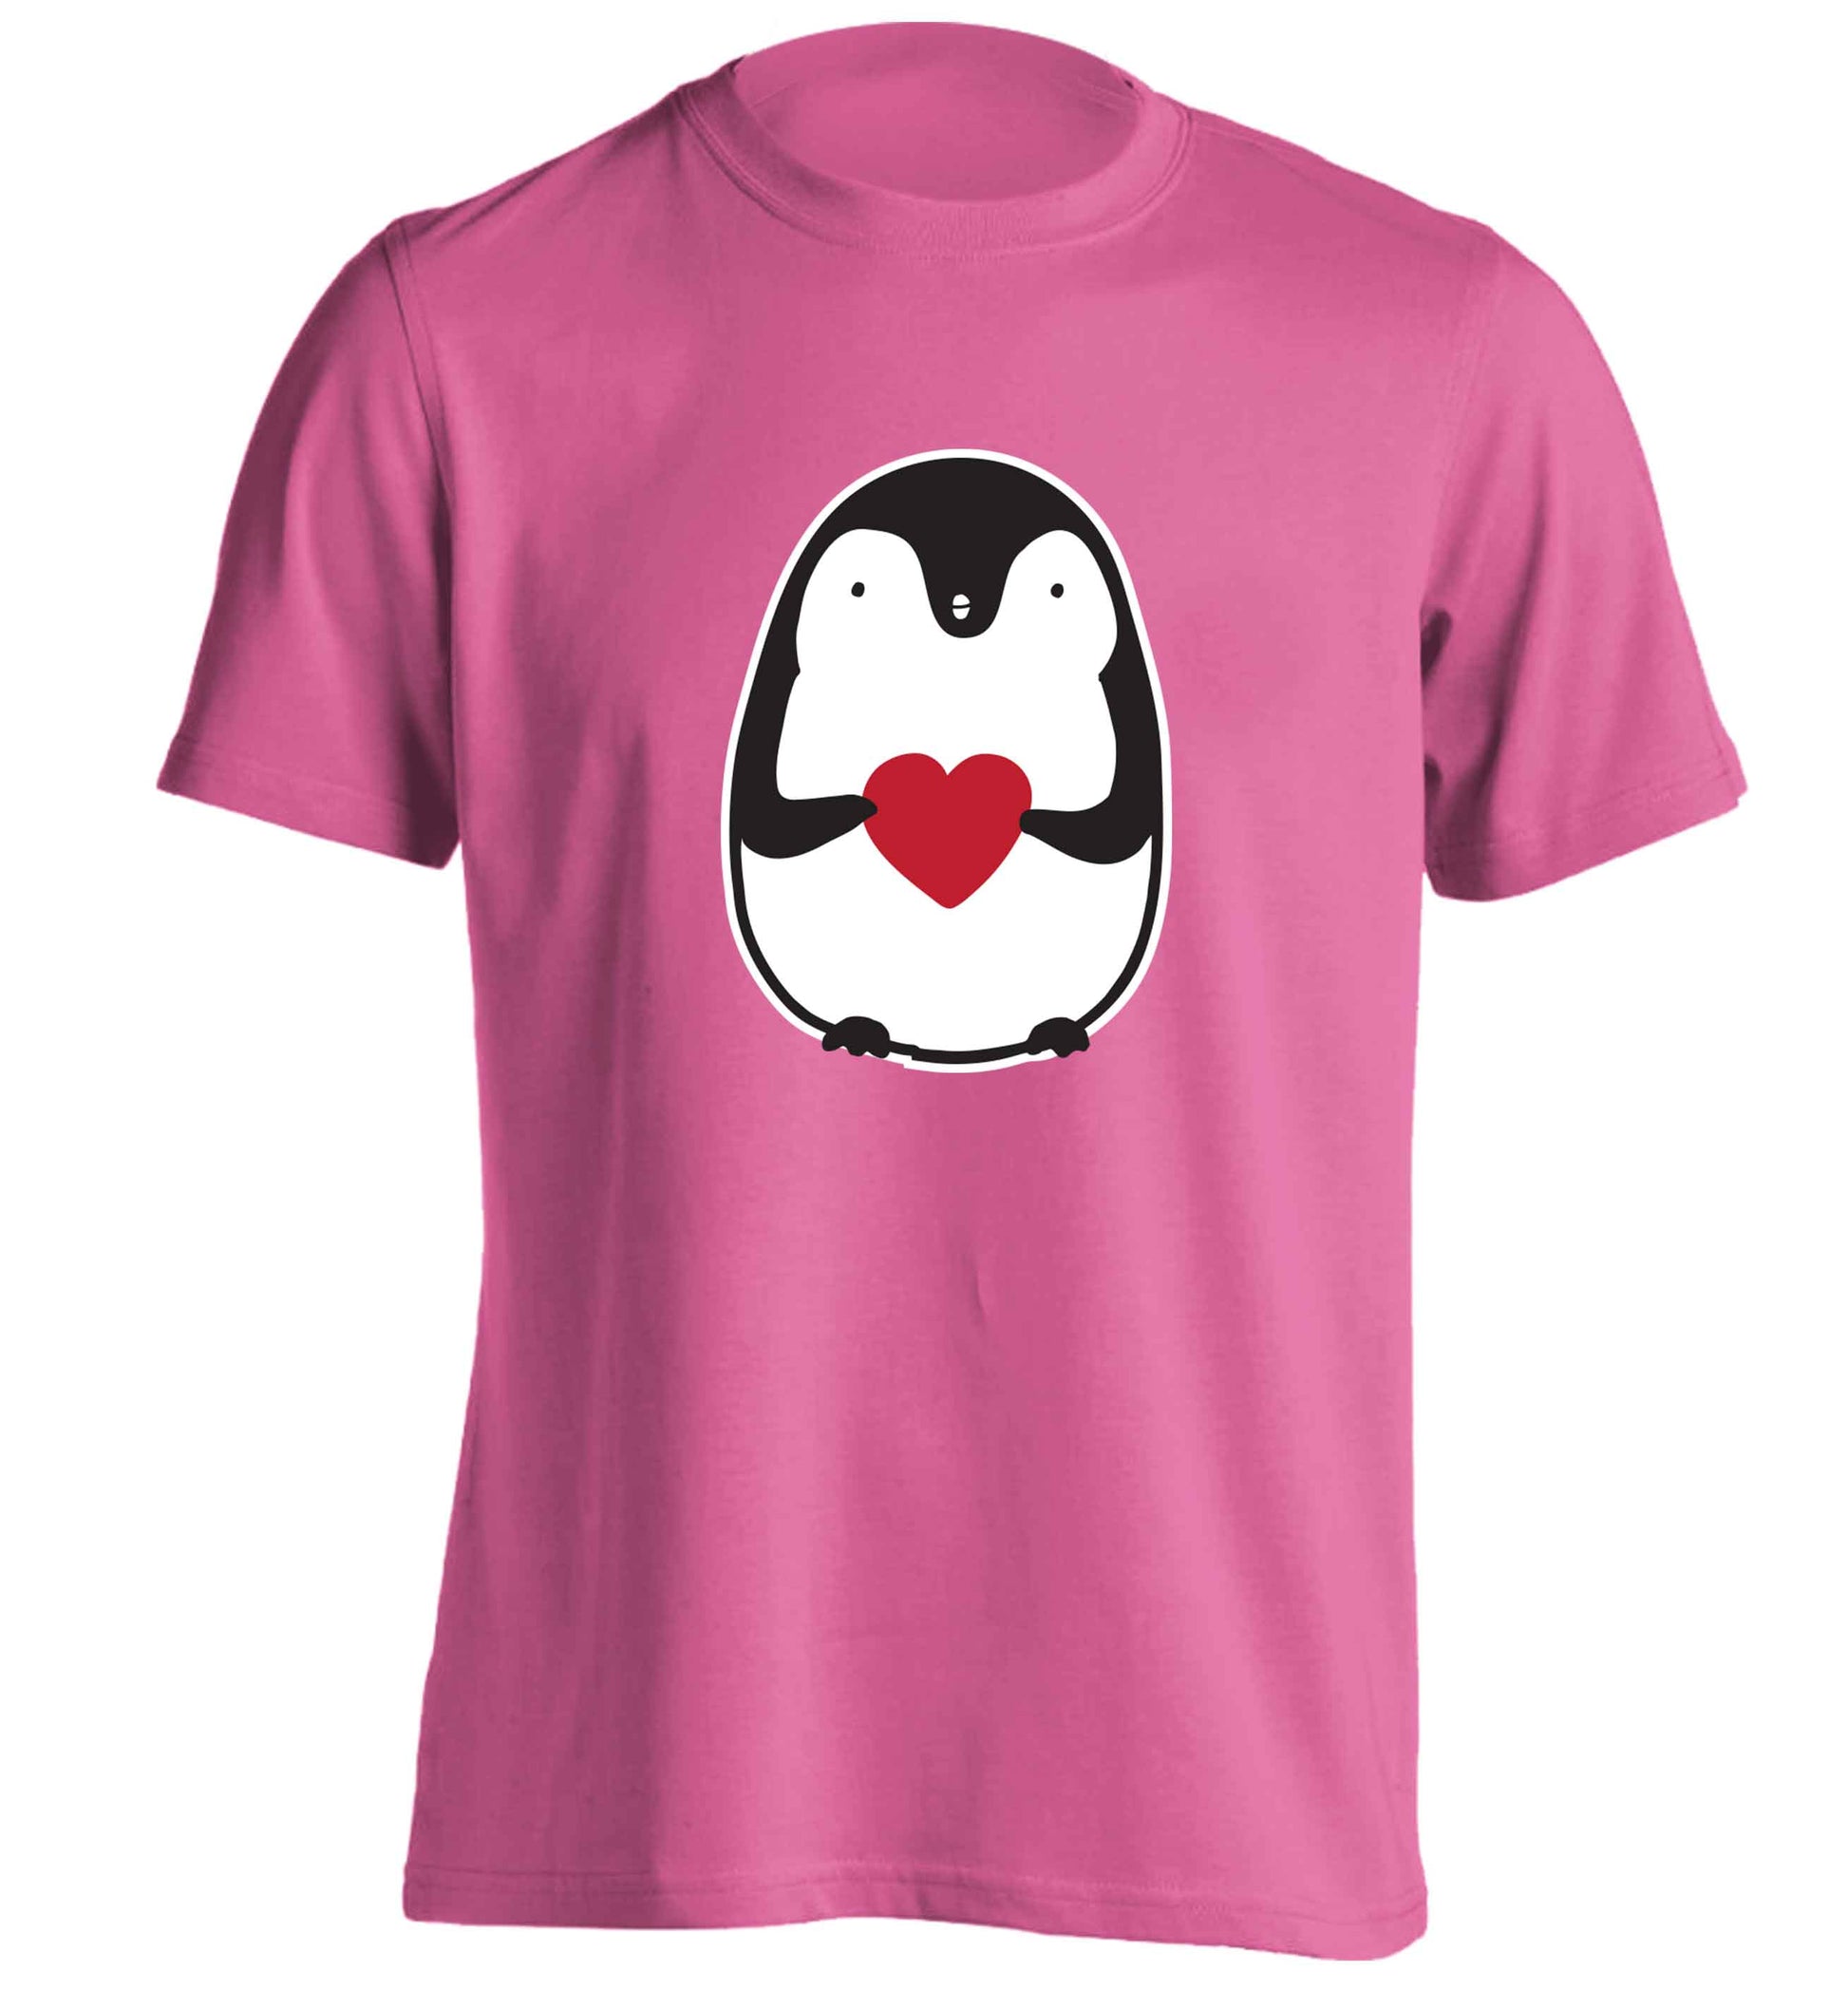 Cute penguin heart adults unisex pink Tshirt 2XL